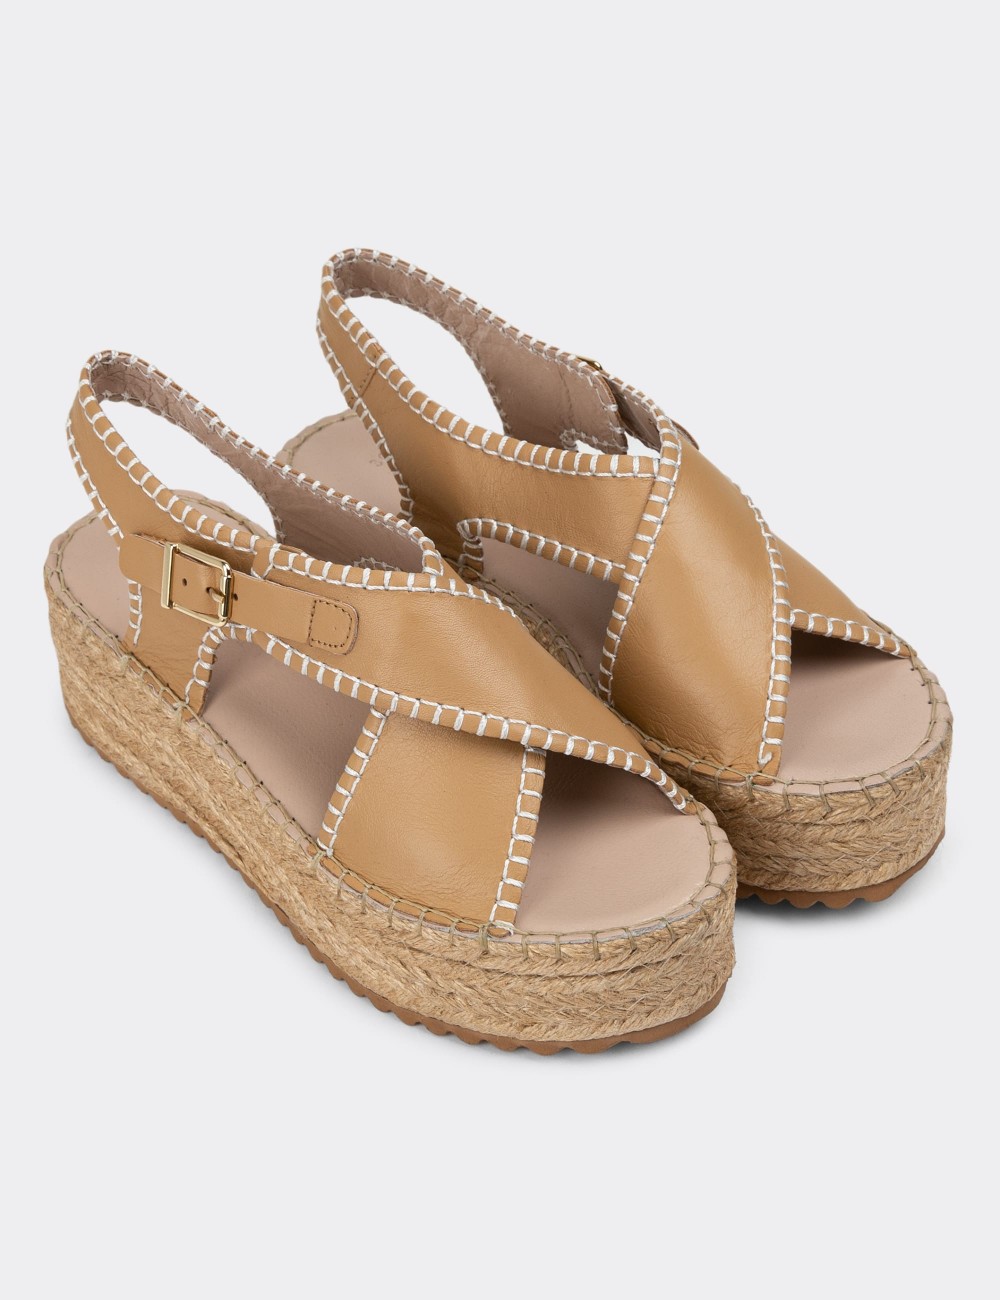 Camel Leather Sandals - R2501ZCMLC01